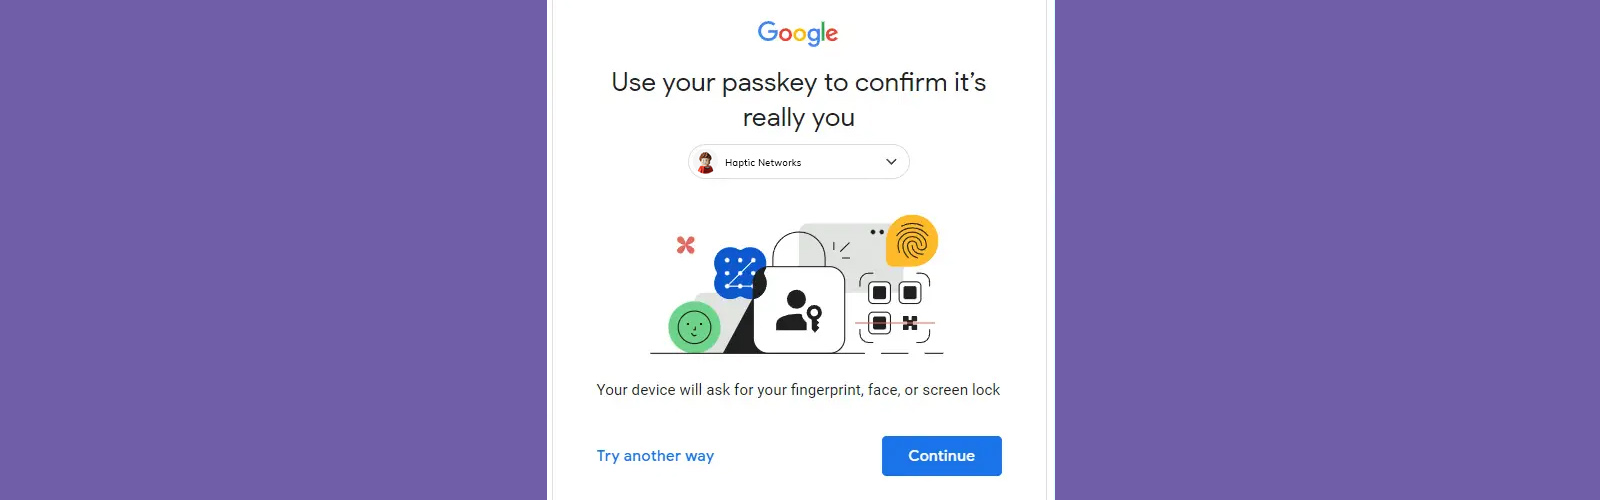 Google Passkeys UI